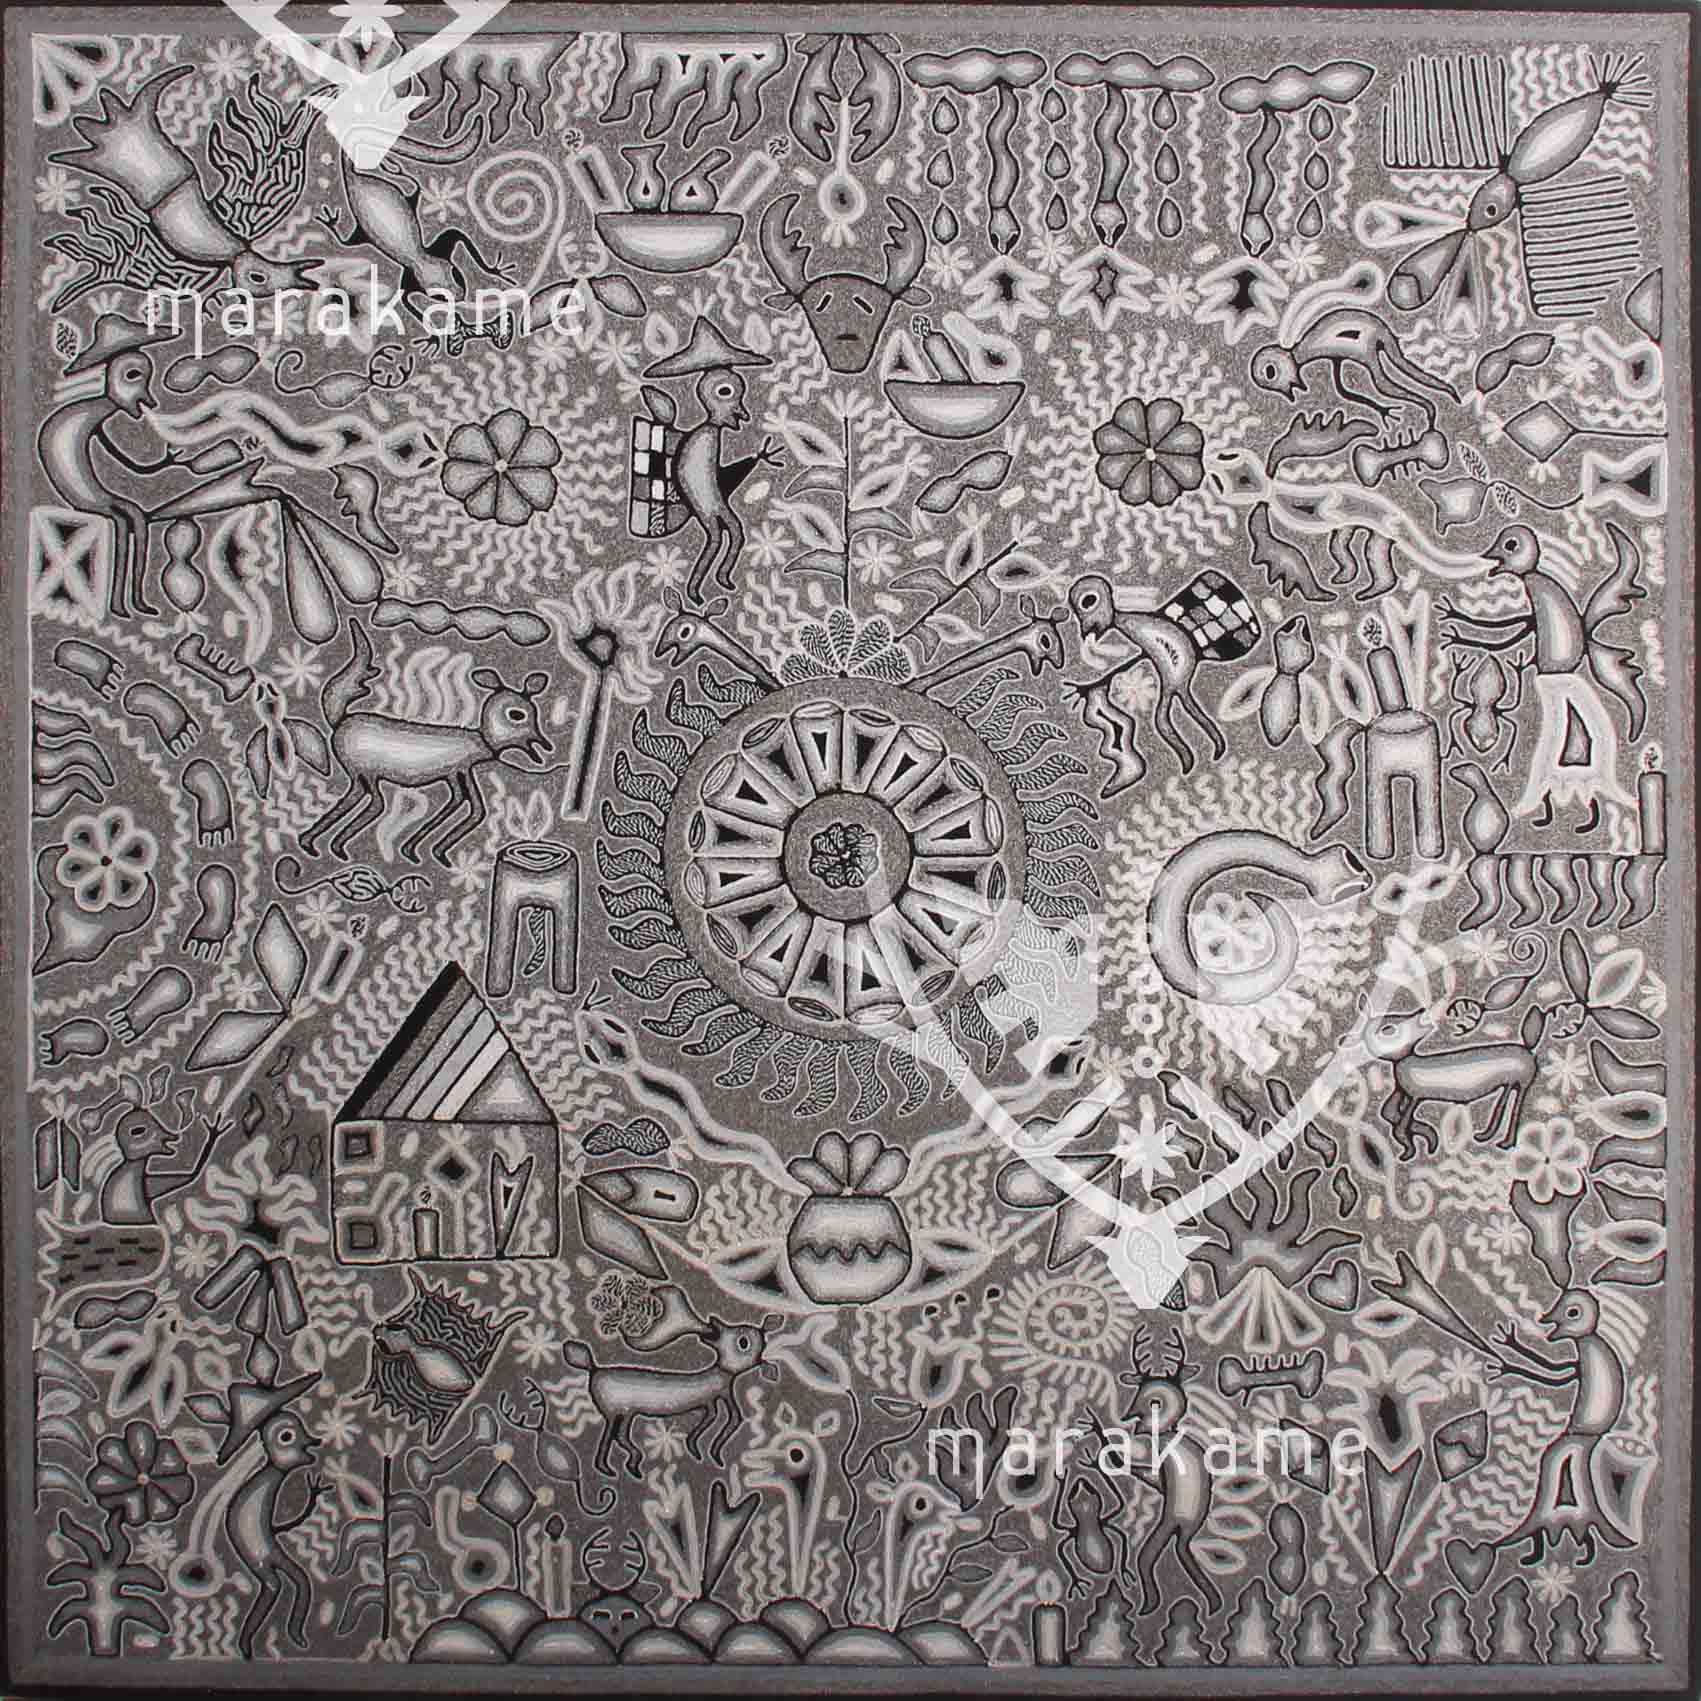 Nierika de Estambre Cuadro Huichol - Nierikate - 120 x 120 cm. - Arte Huichol - Marakame